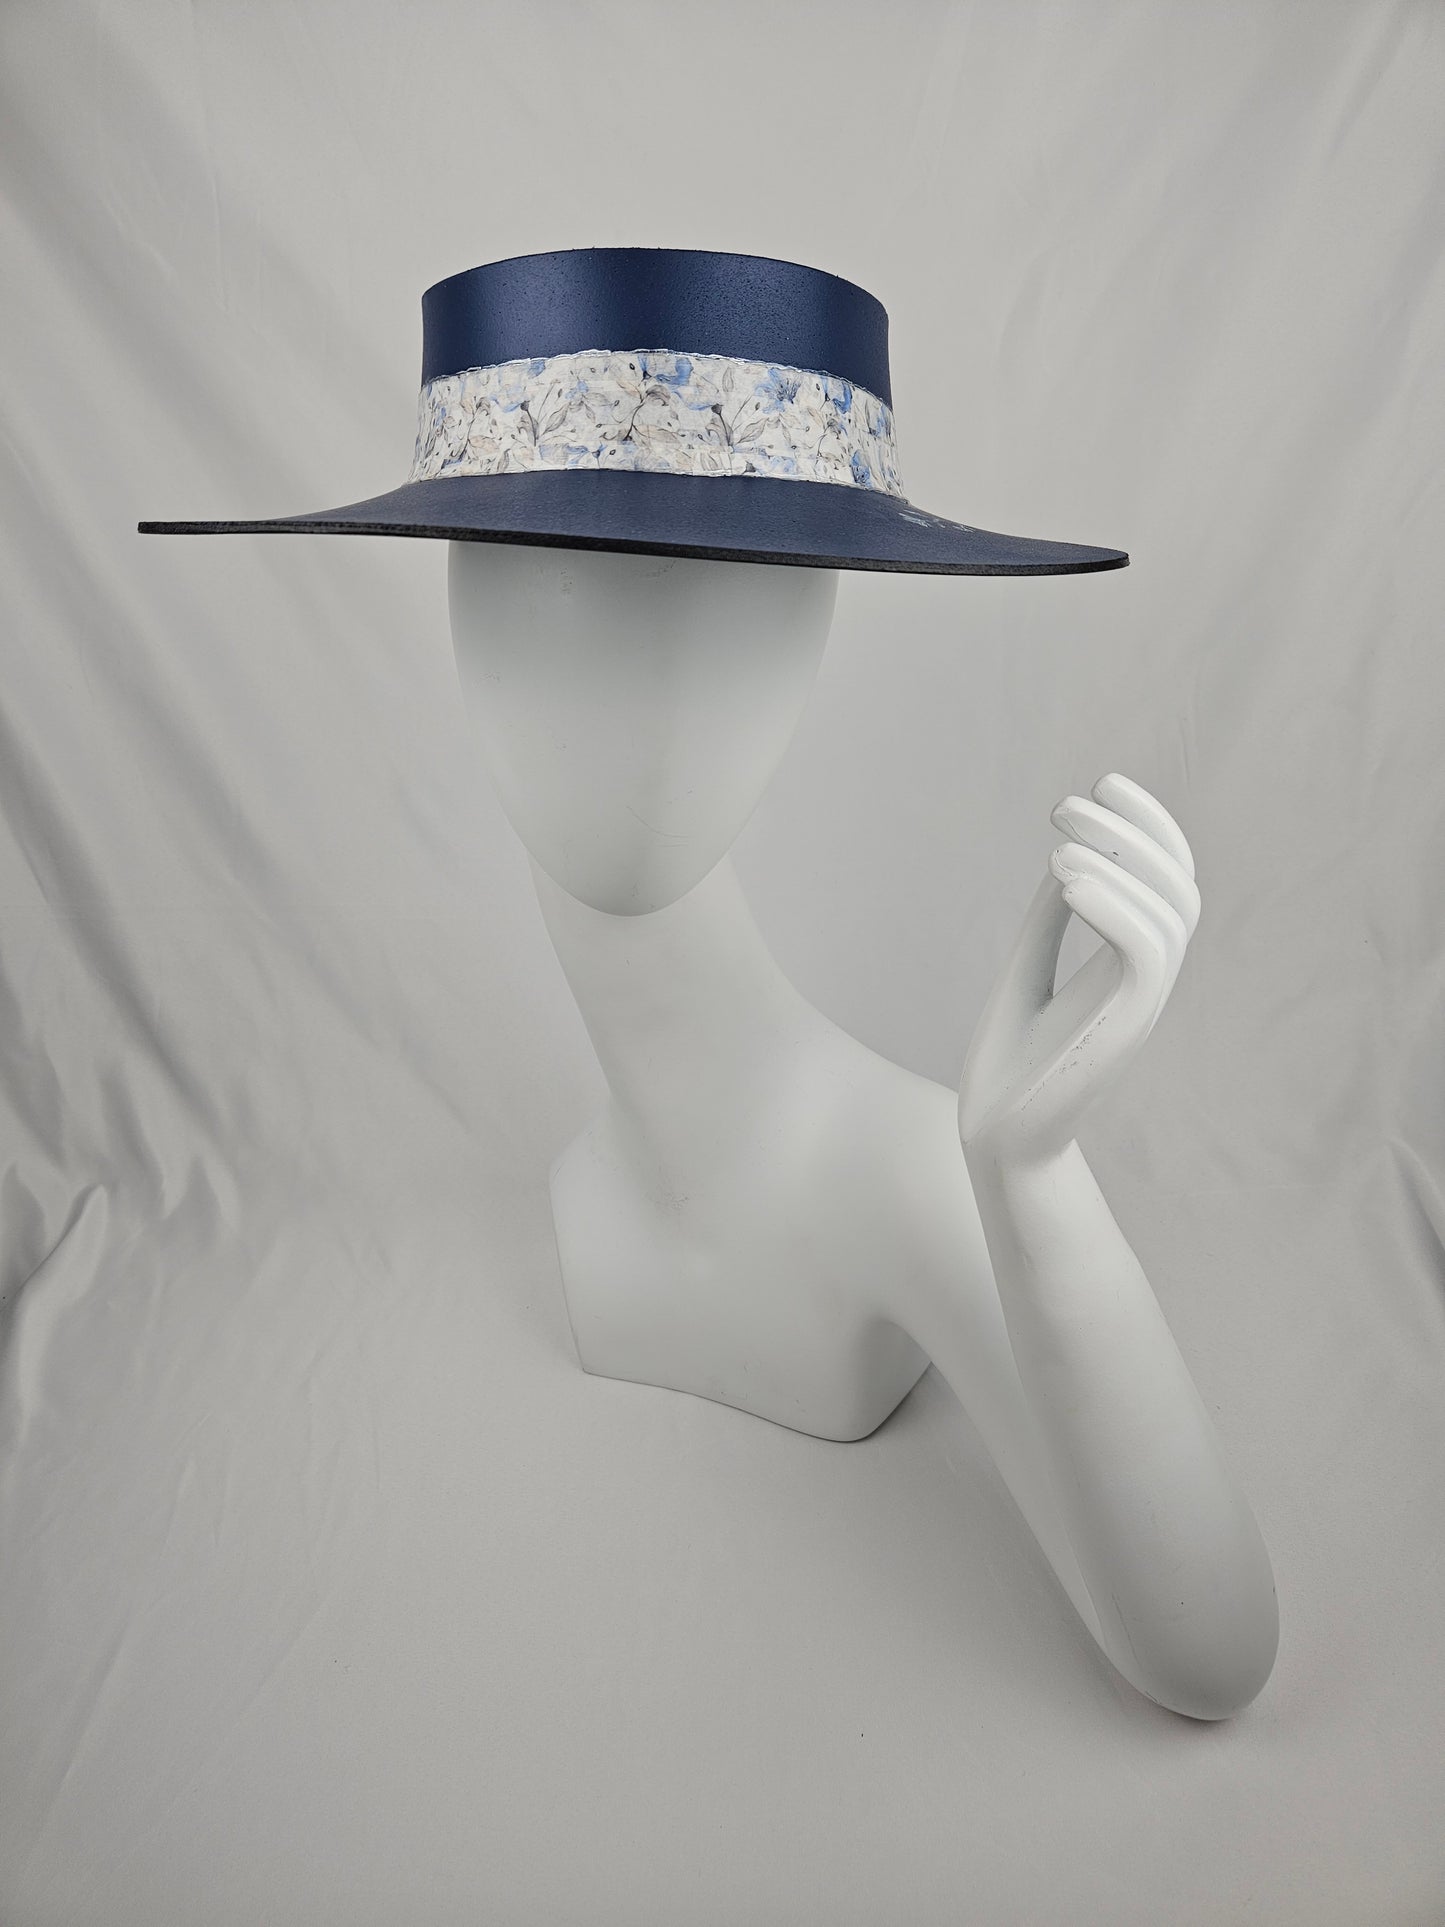 Classic Navy Audrey Foam Sun Visor Hat with Blue Floral Band and Handpainted Floral Motif: Big Brim, Golf, Swim, UV Resistant, No Headache